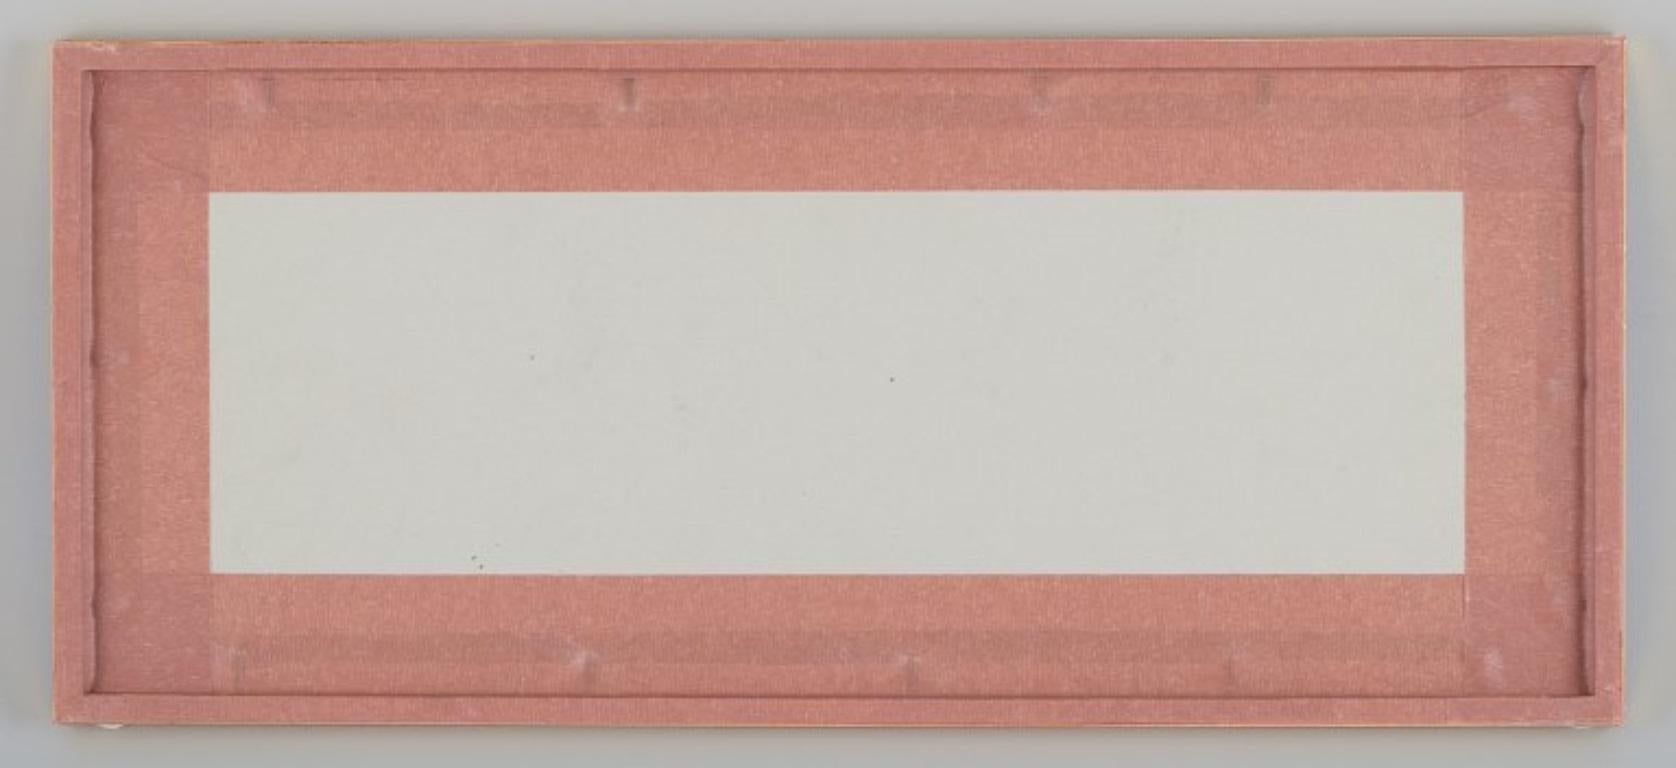 Paper Arne Brandtman, Swedish artist. Color print on paper. Abstract composition. For Sale